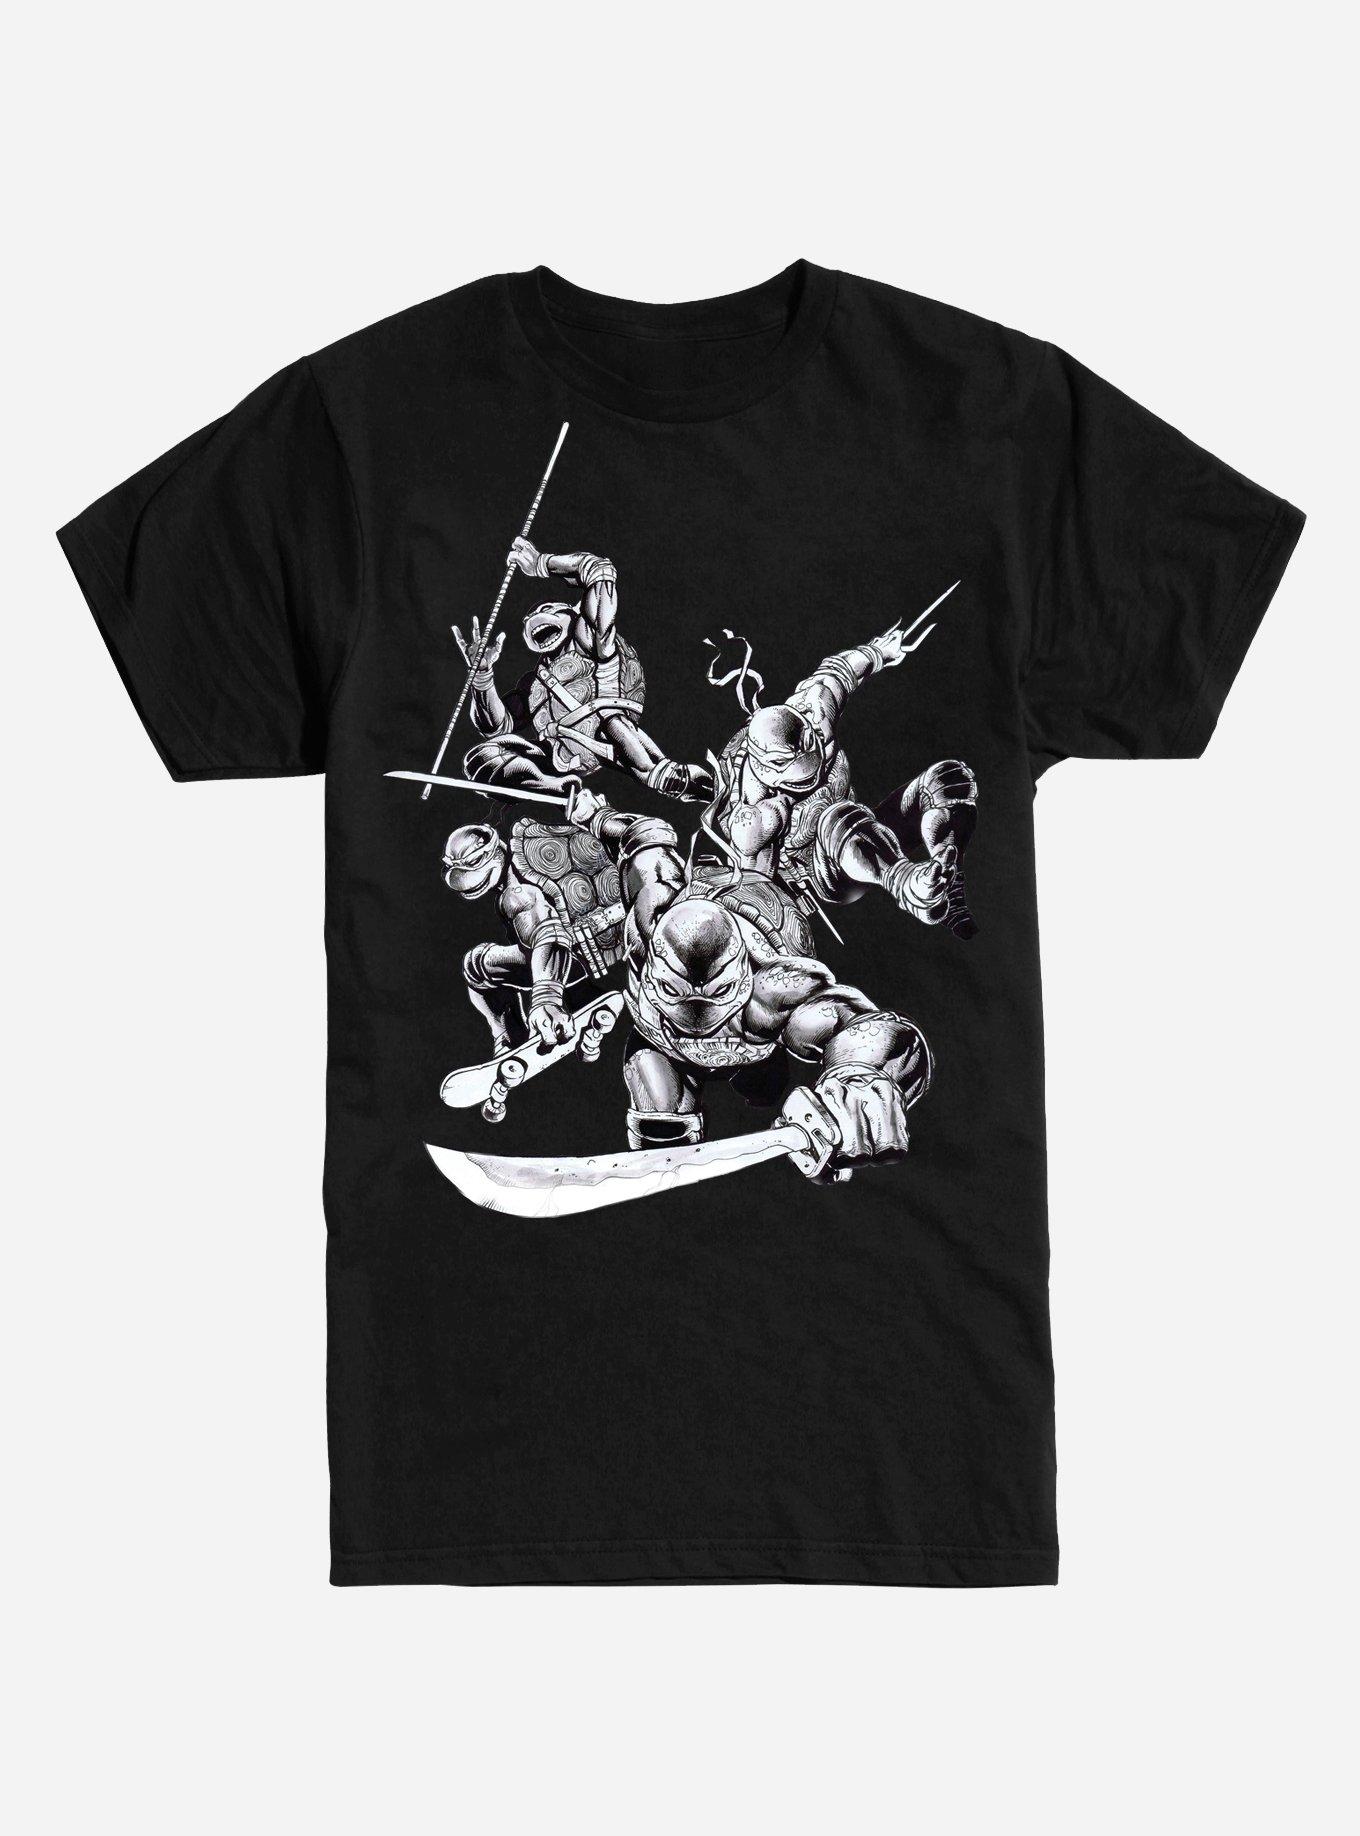 Teenage Mutant Ninja Turtles TMNT Men's Black T-Shirt Tee Shirt-Small